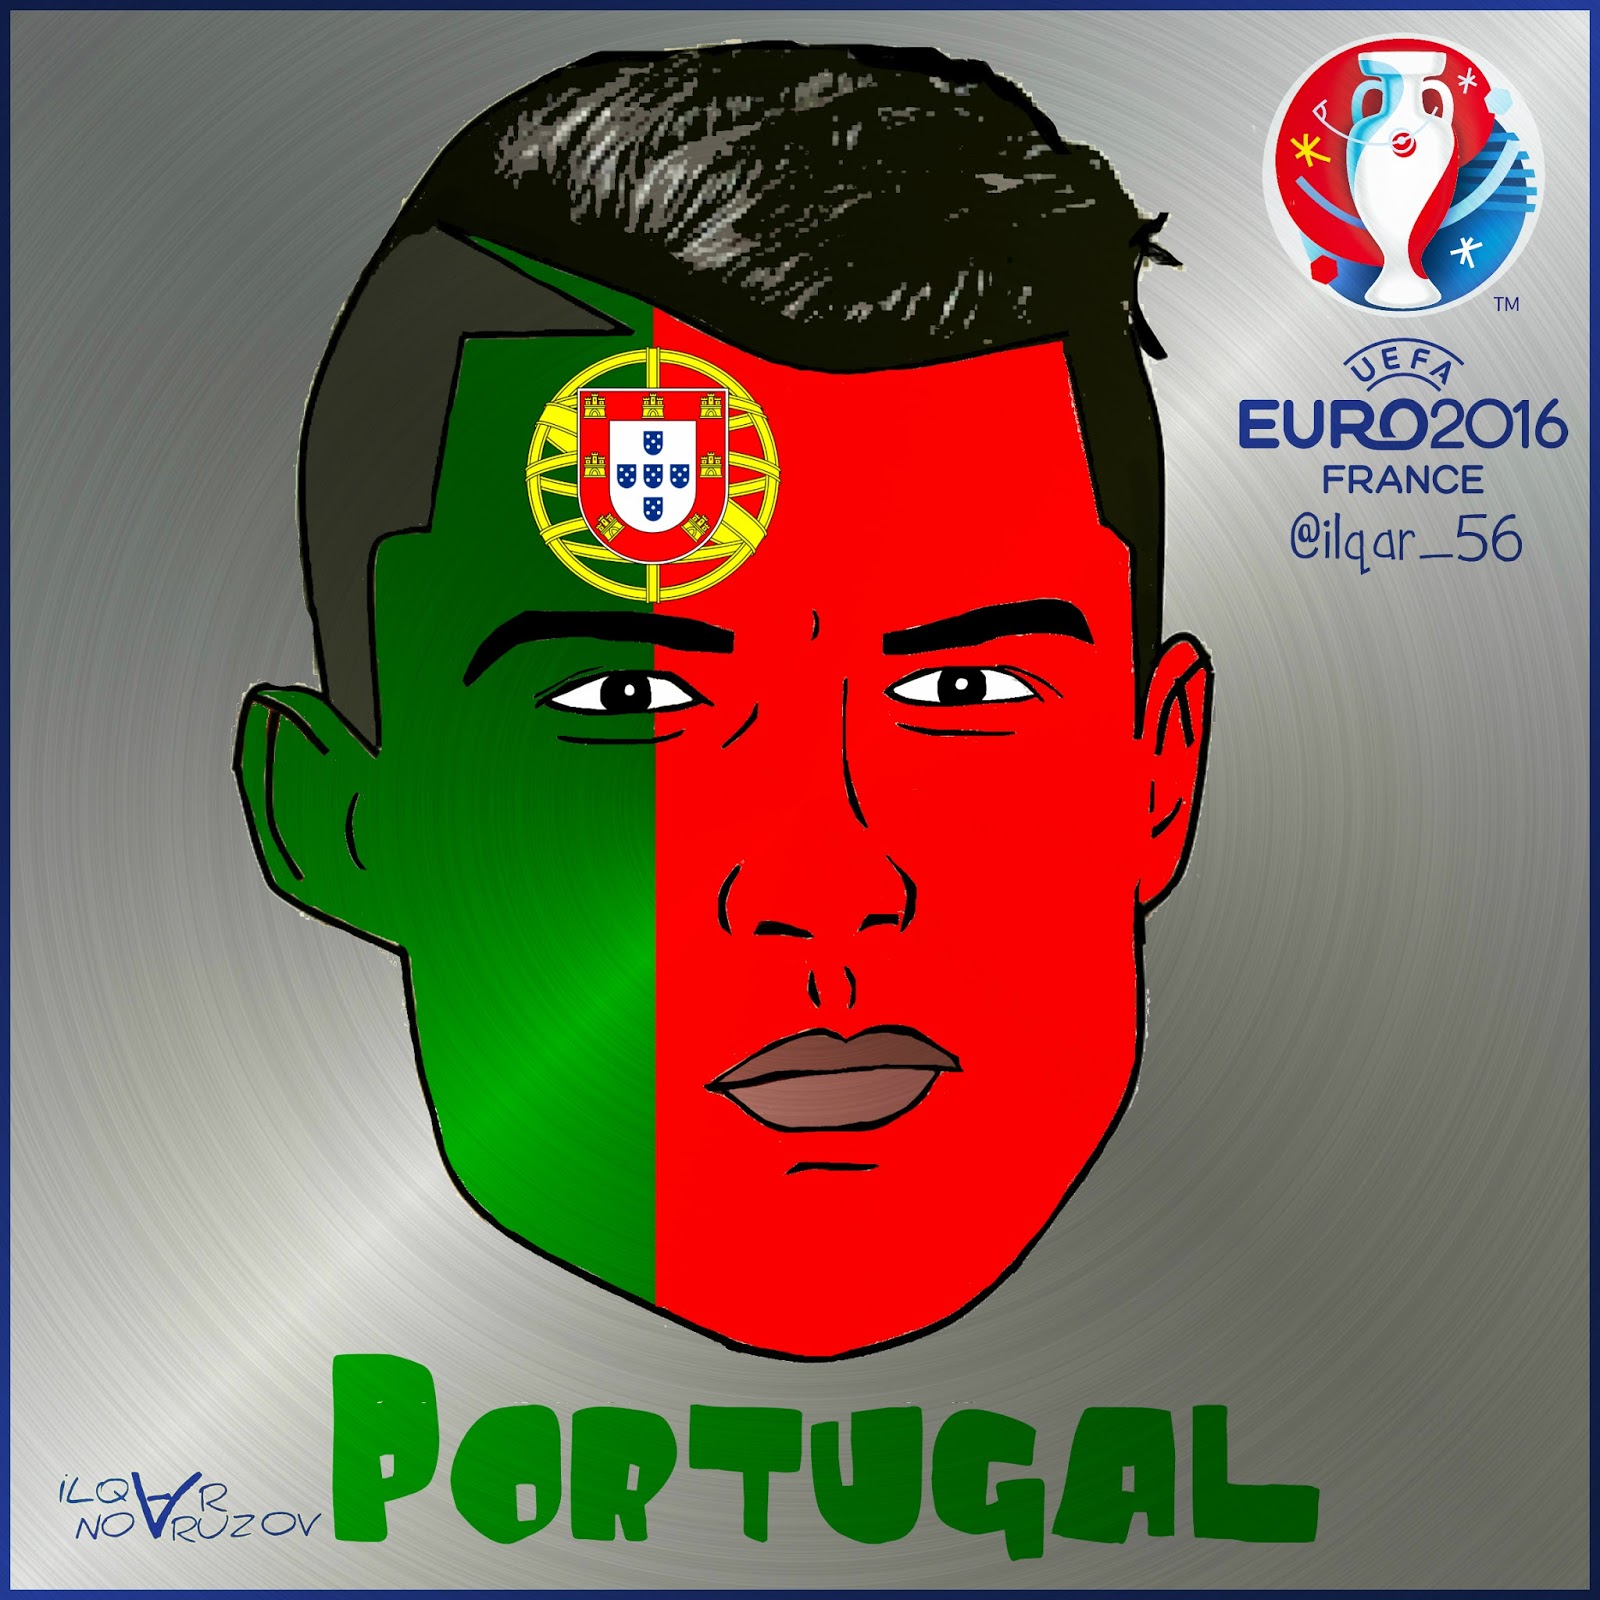 Ilqar Novruzov Cartoon: EURO 2016 Portugal national football team ...